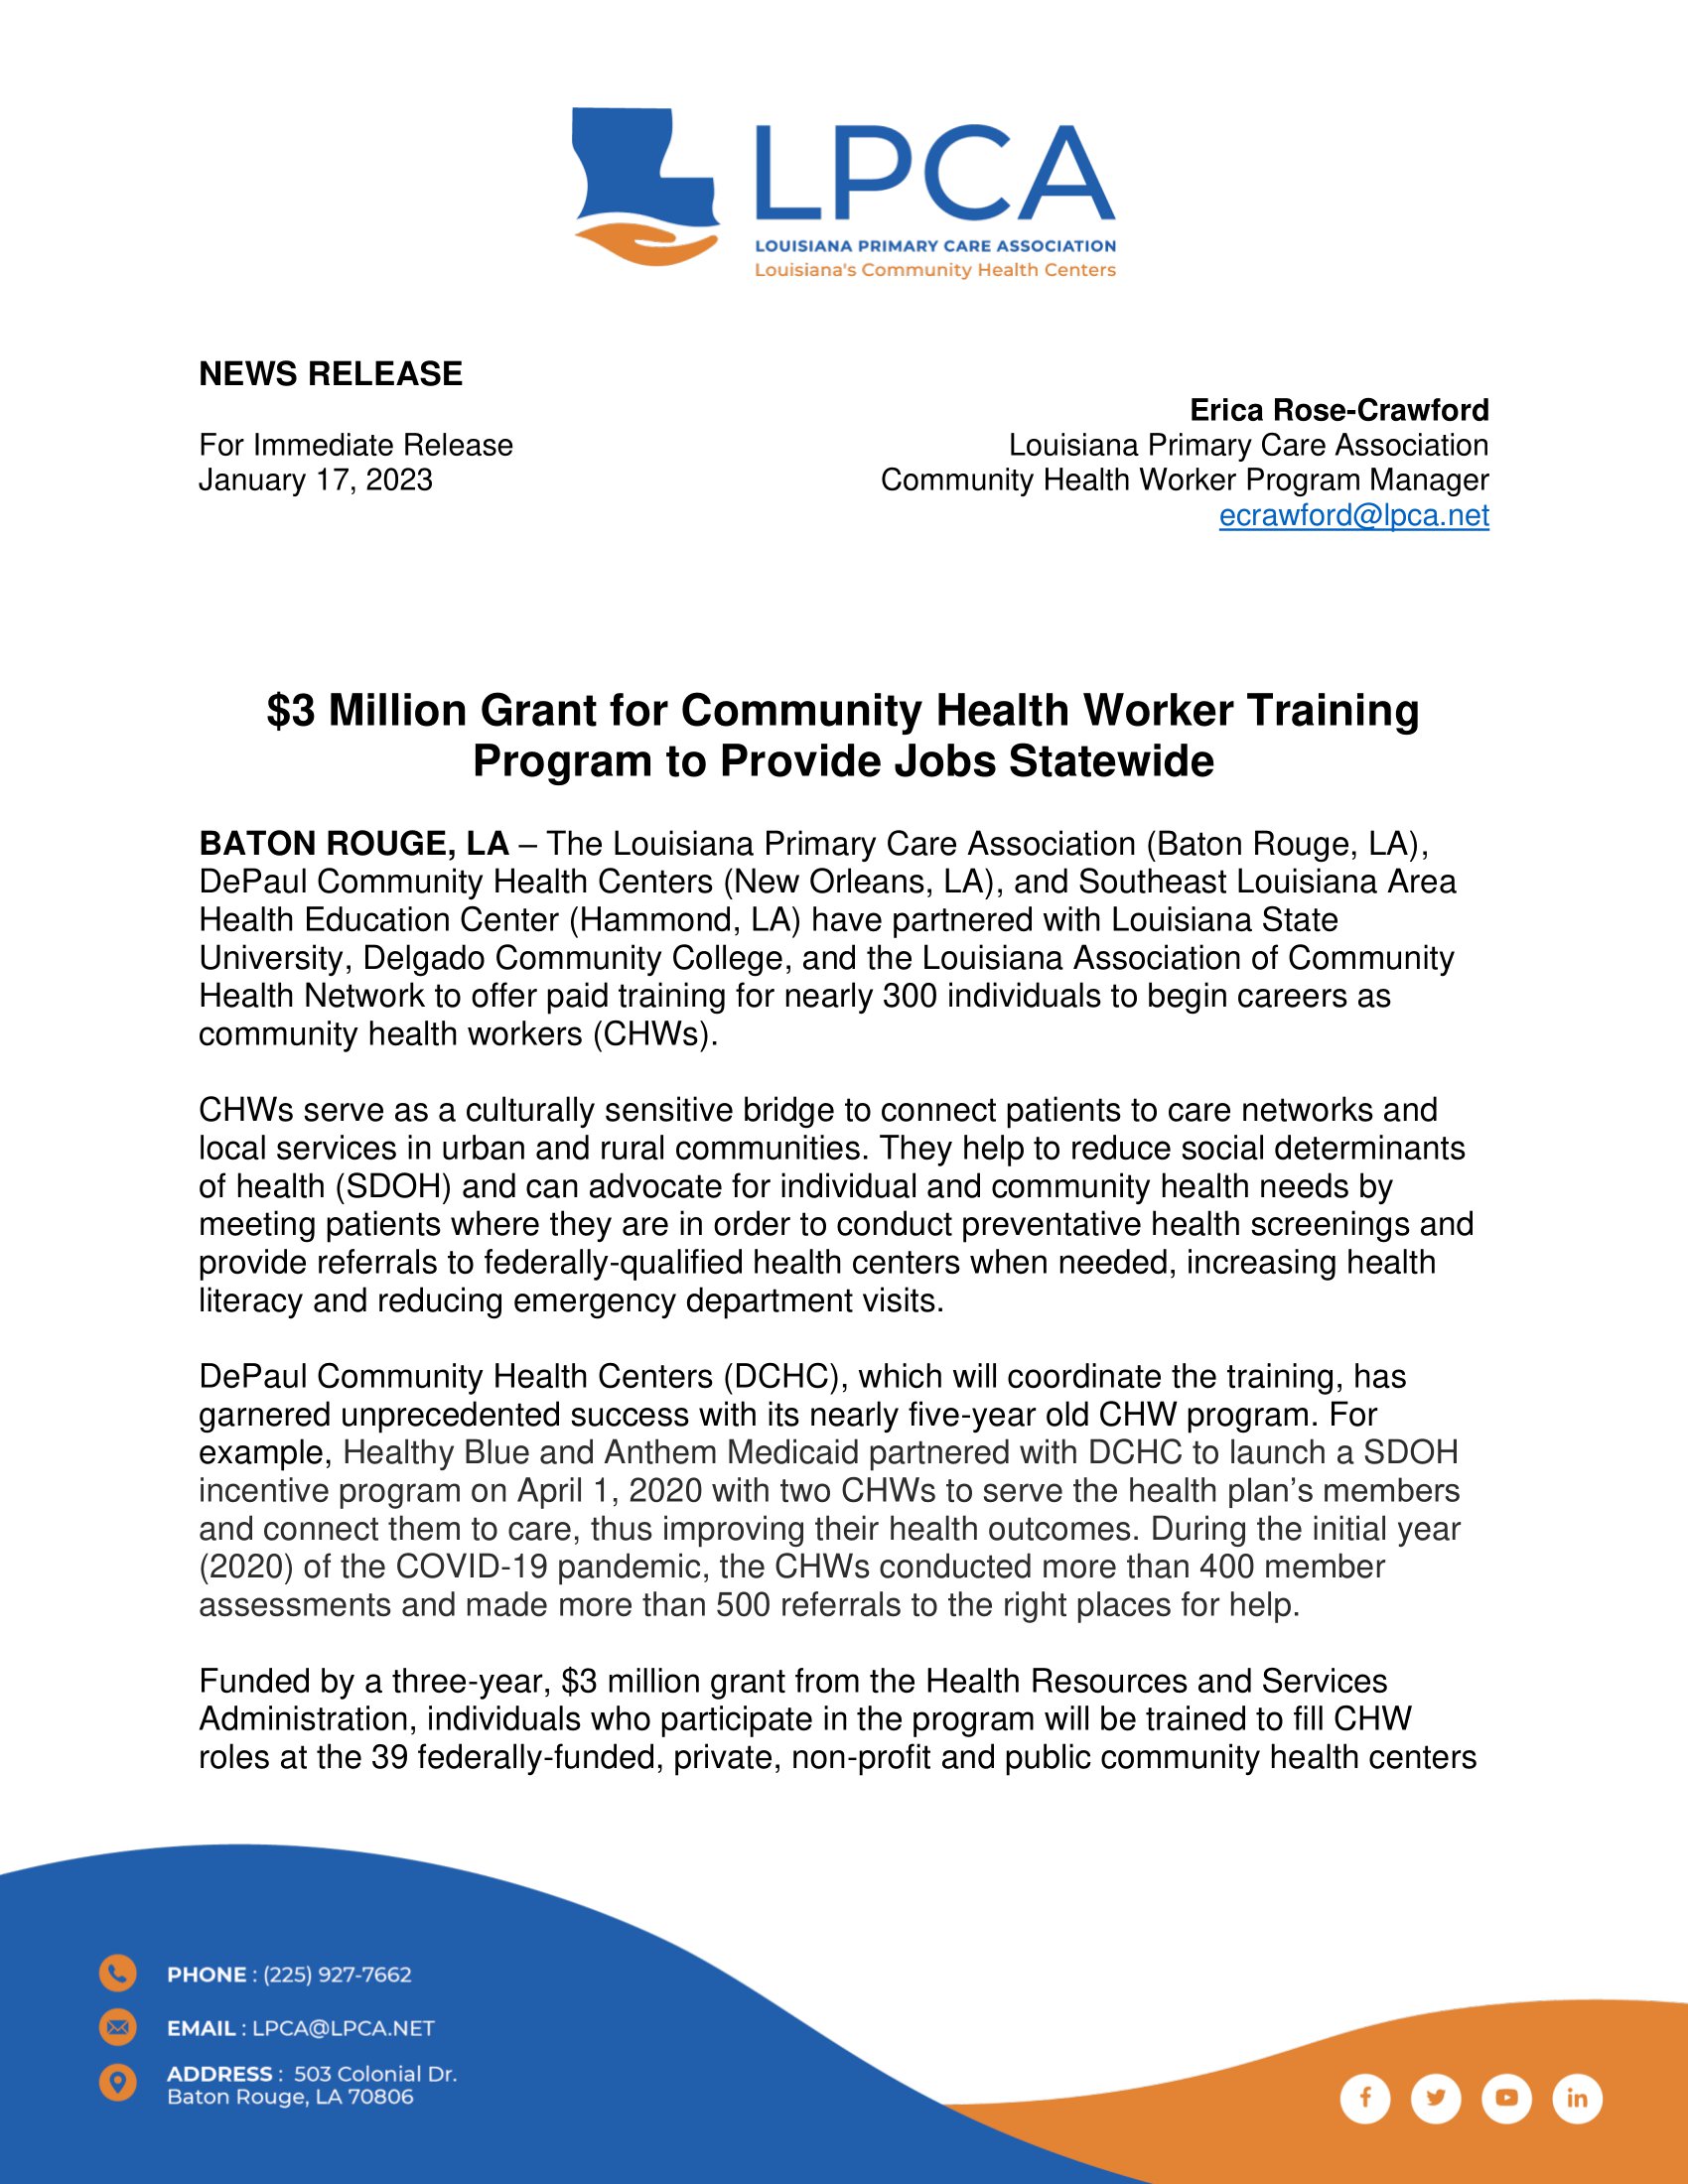 Community Health Worker Training Program Press Release 1_17-1